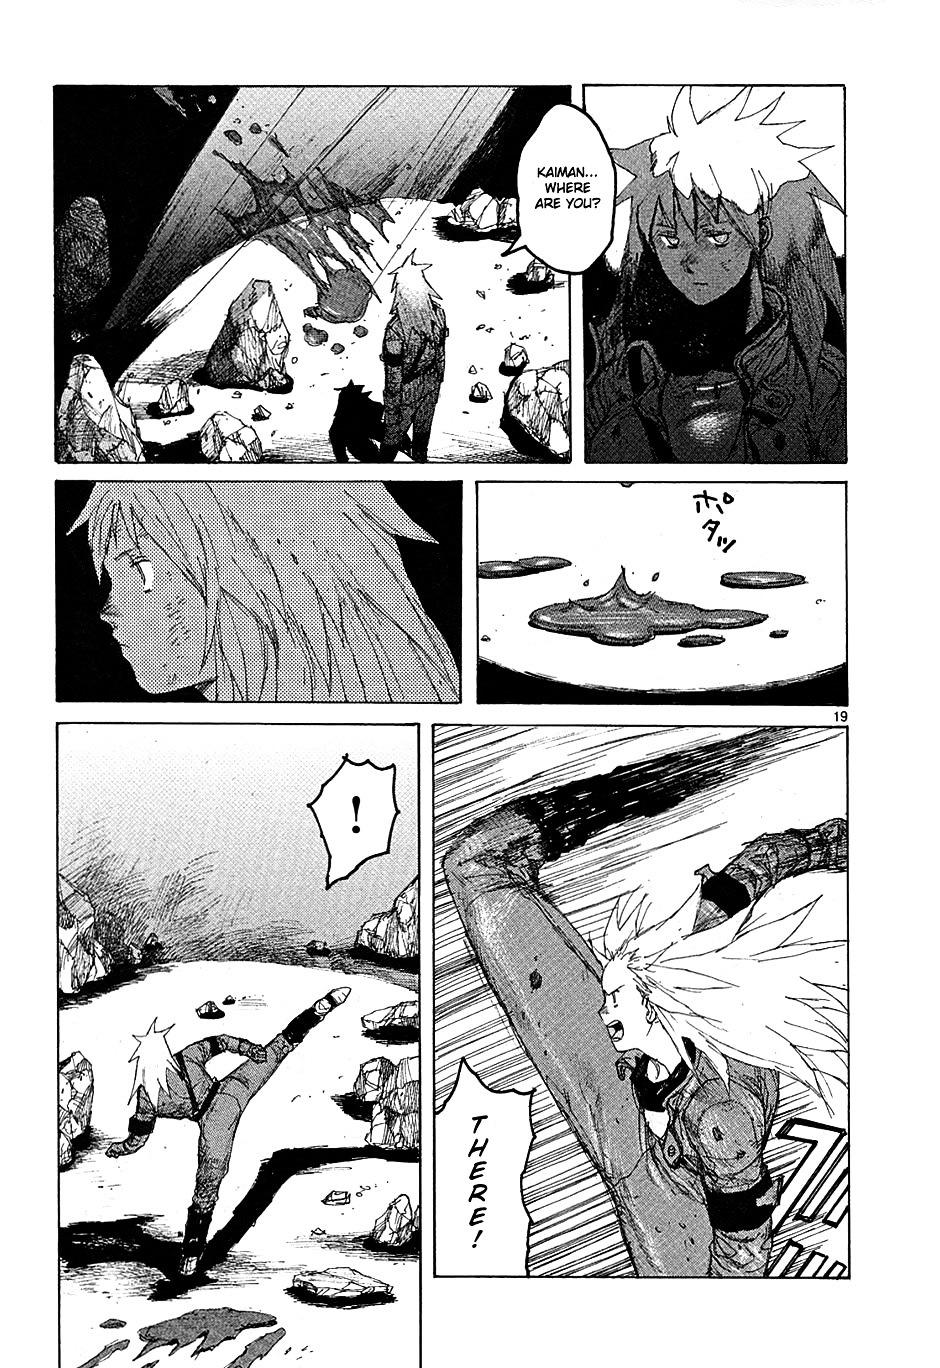 Dorohedoro Chapter 39 : Battle.. Boy Meets Girl page 19 - Mangakakalot